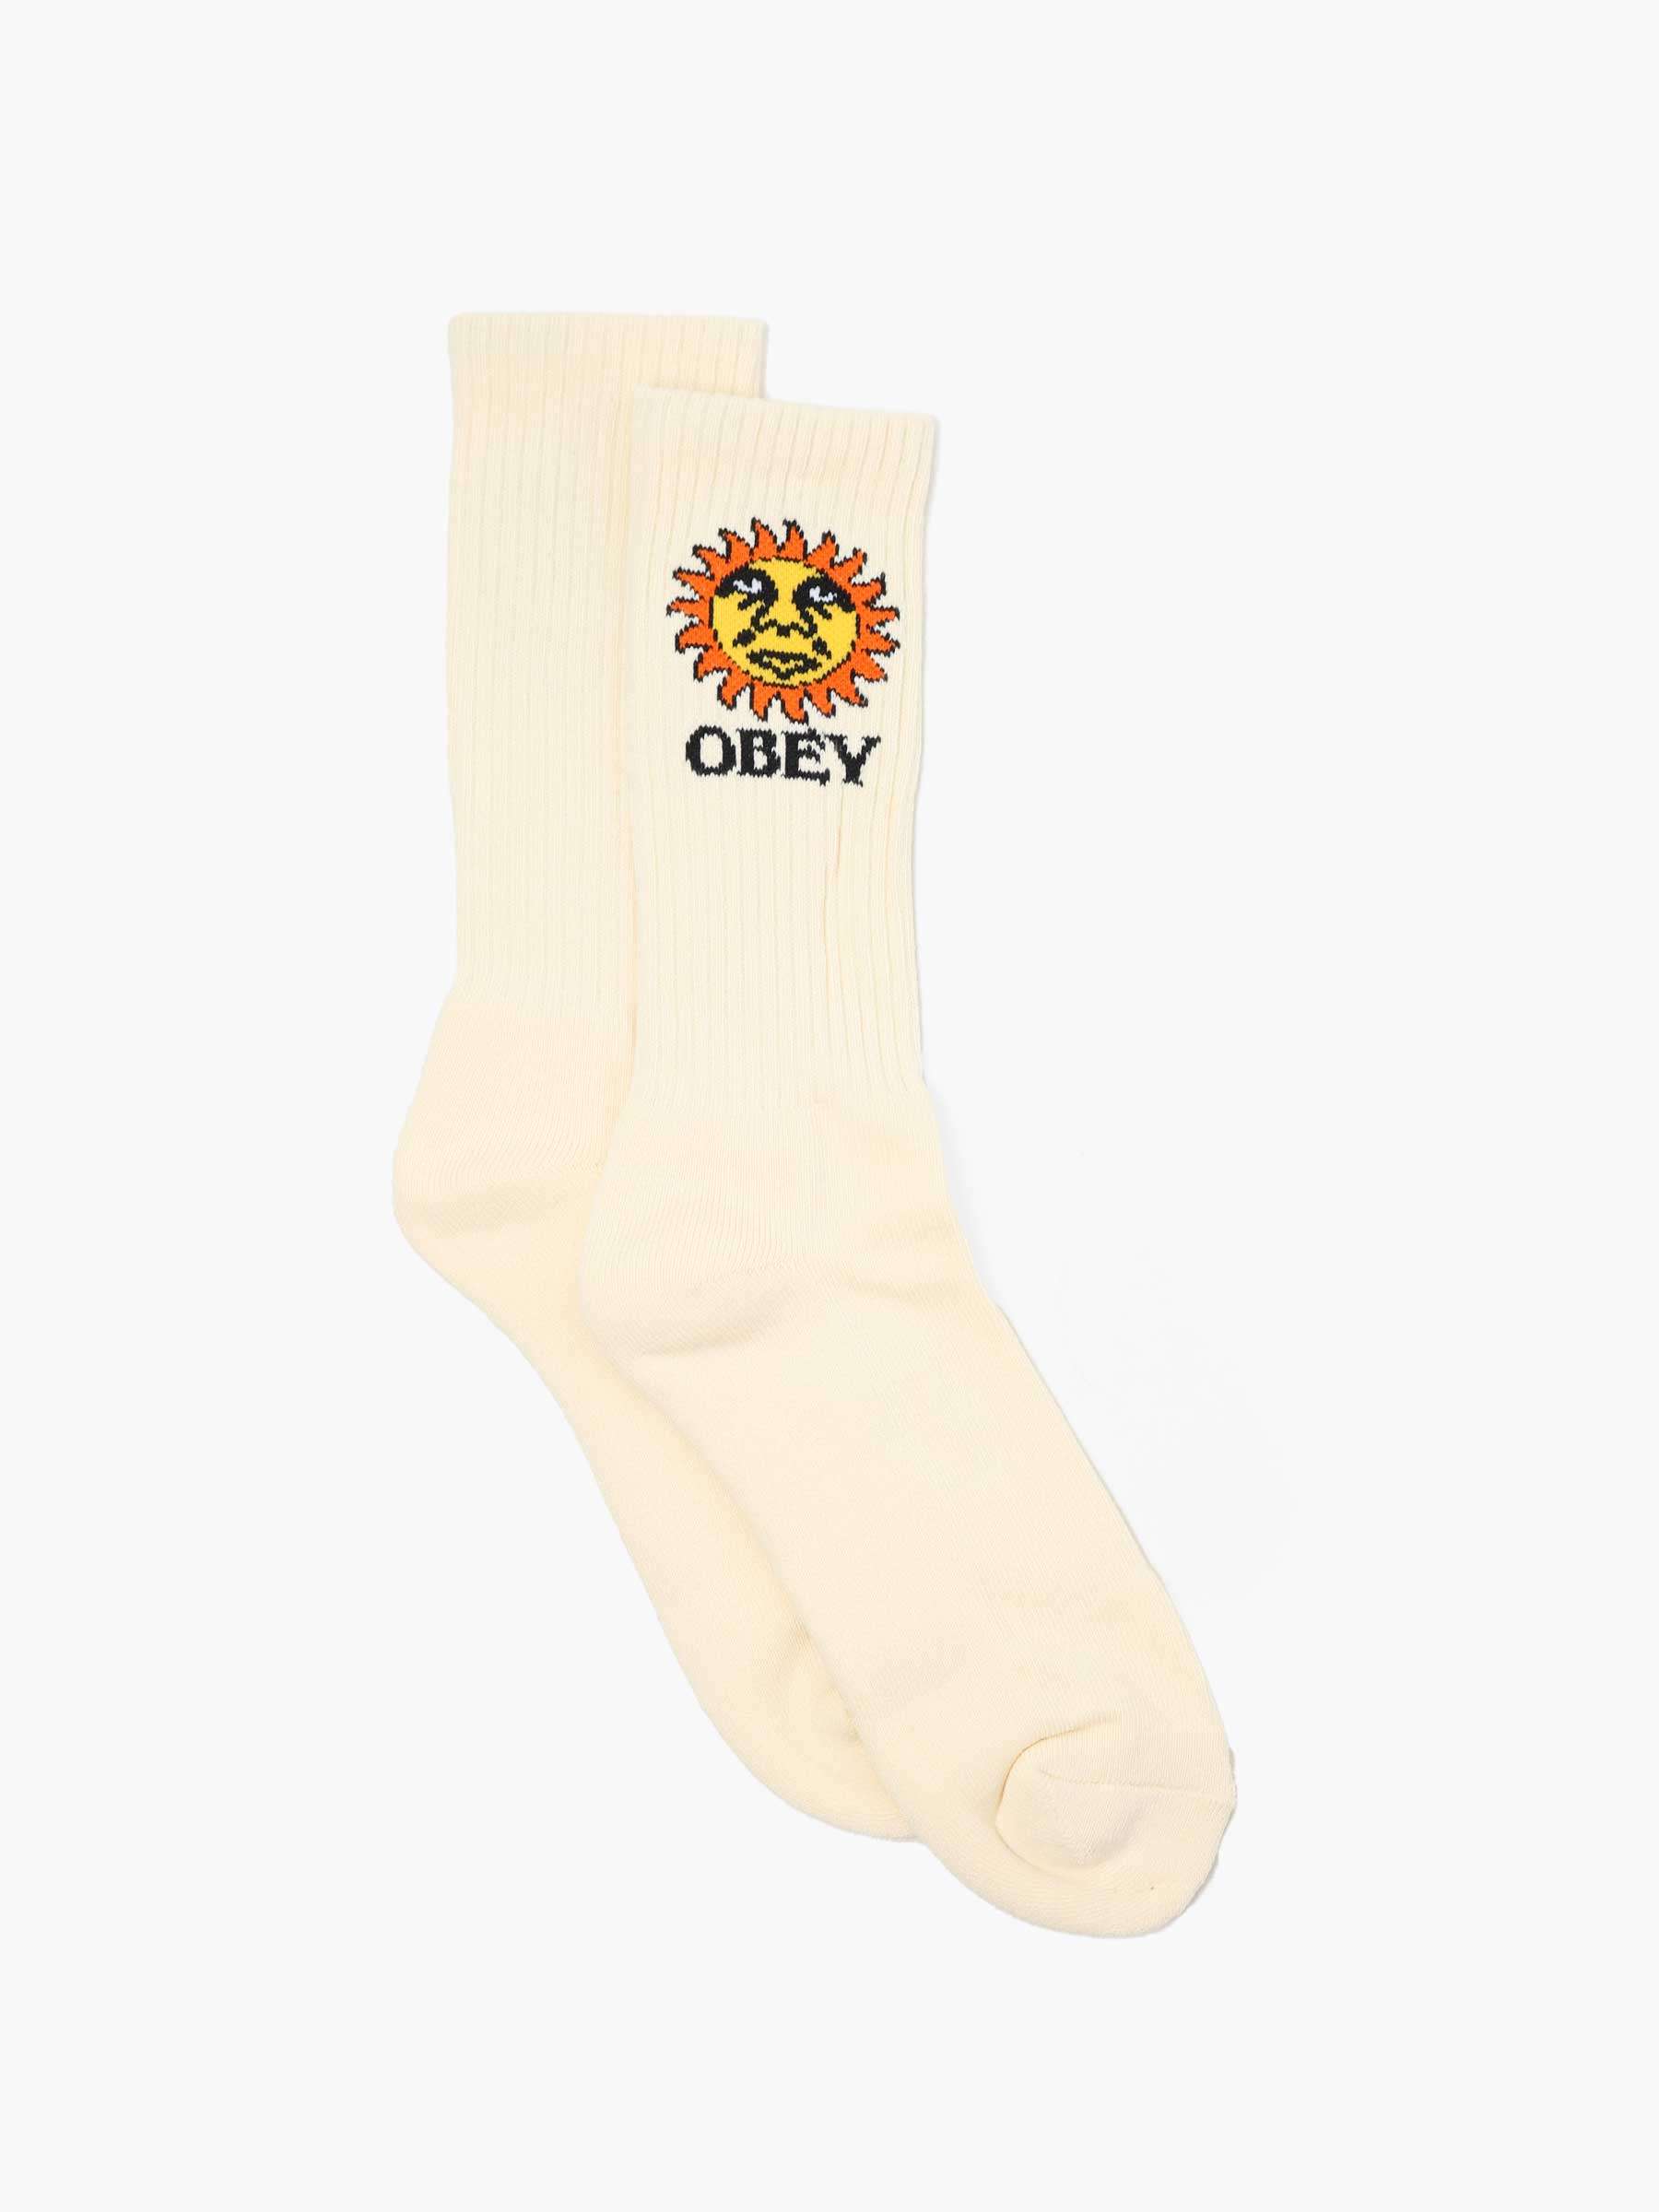 Obey Sunshine Socks Unbleached 100260181-UBL